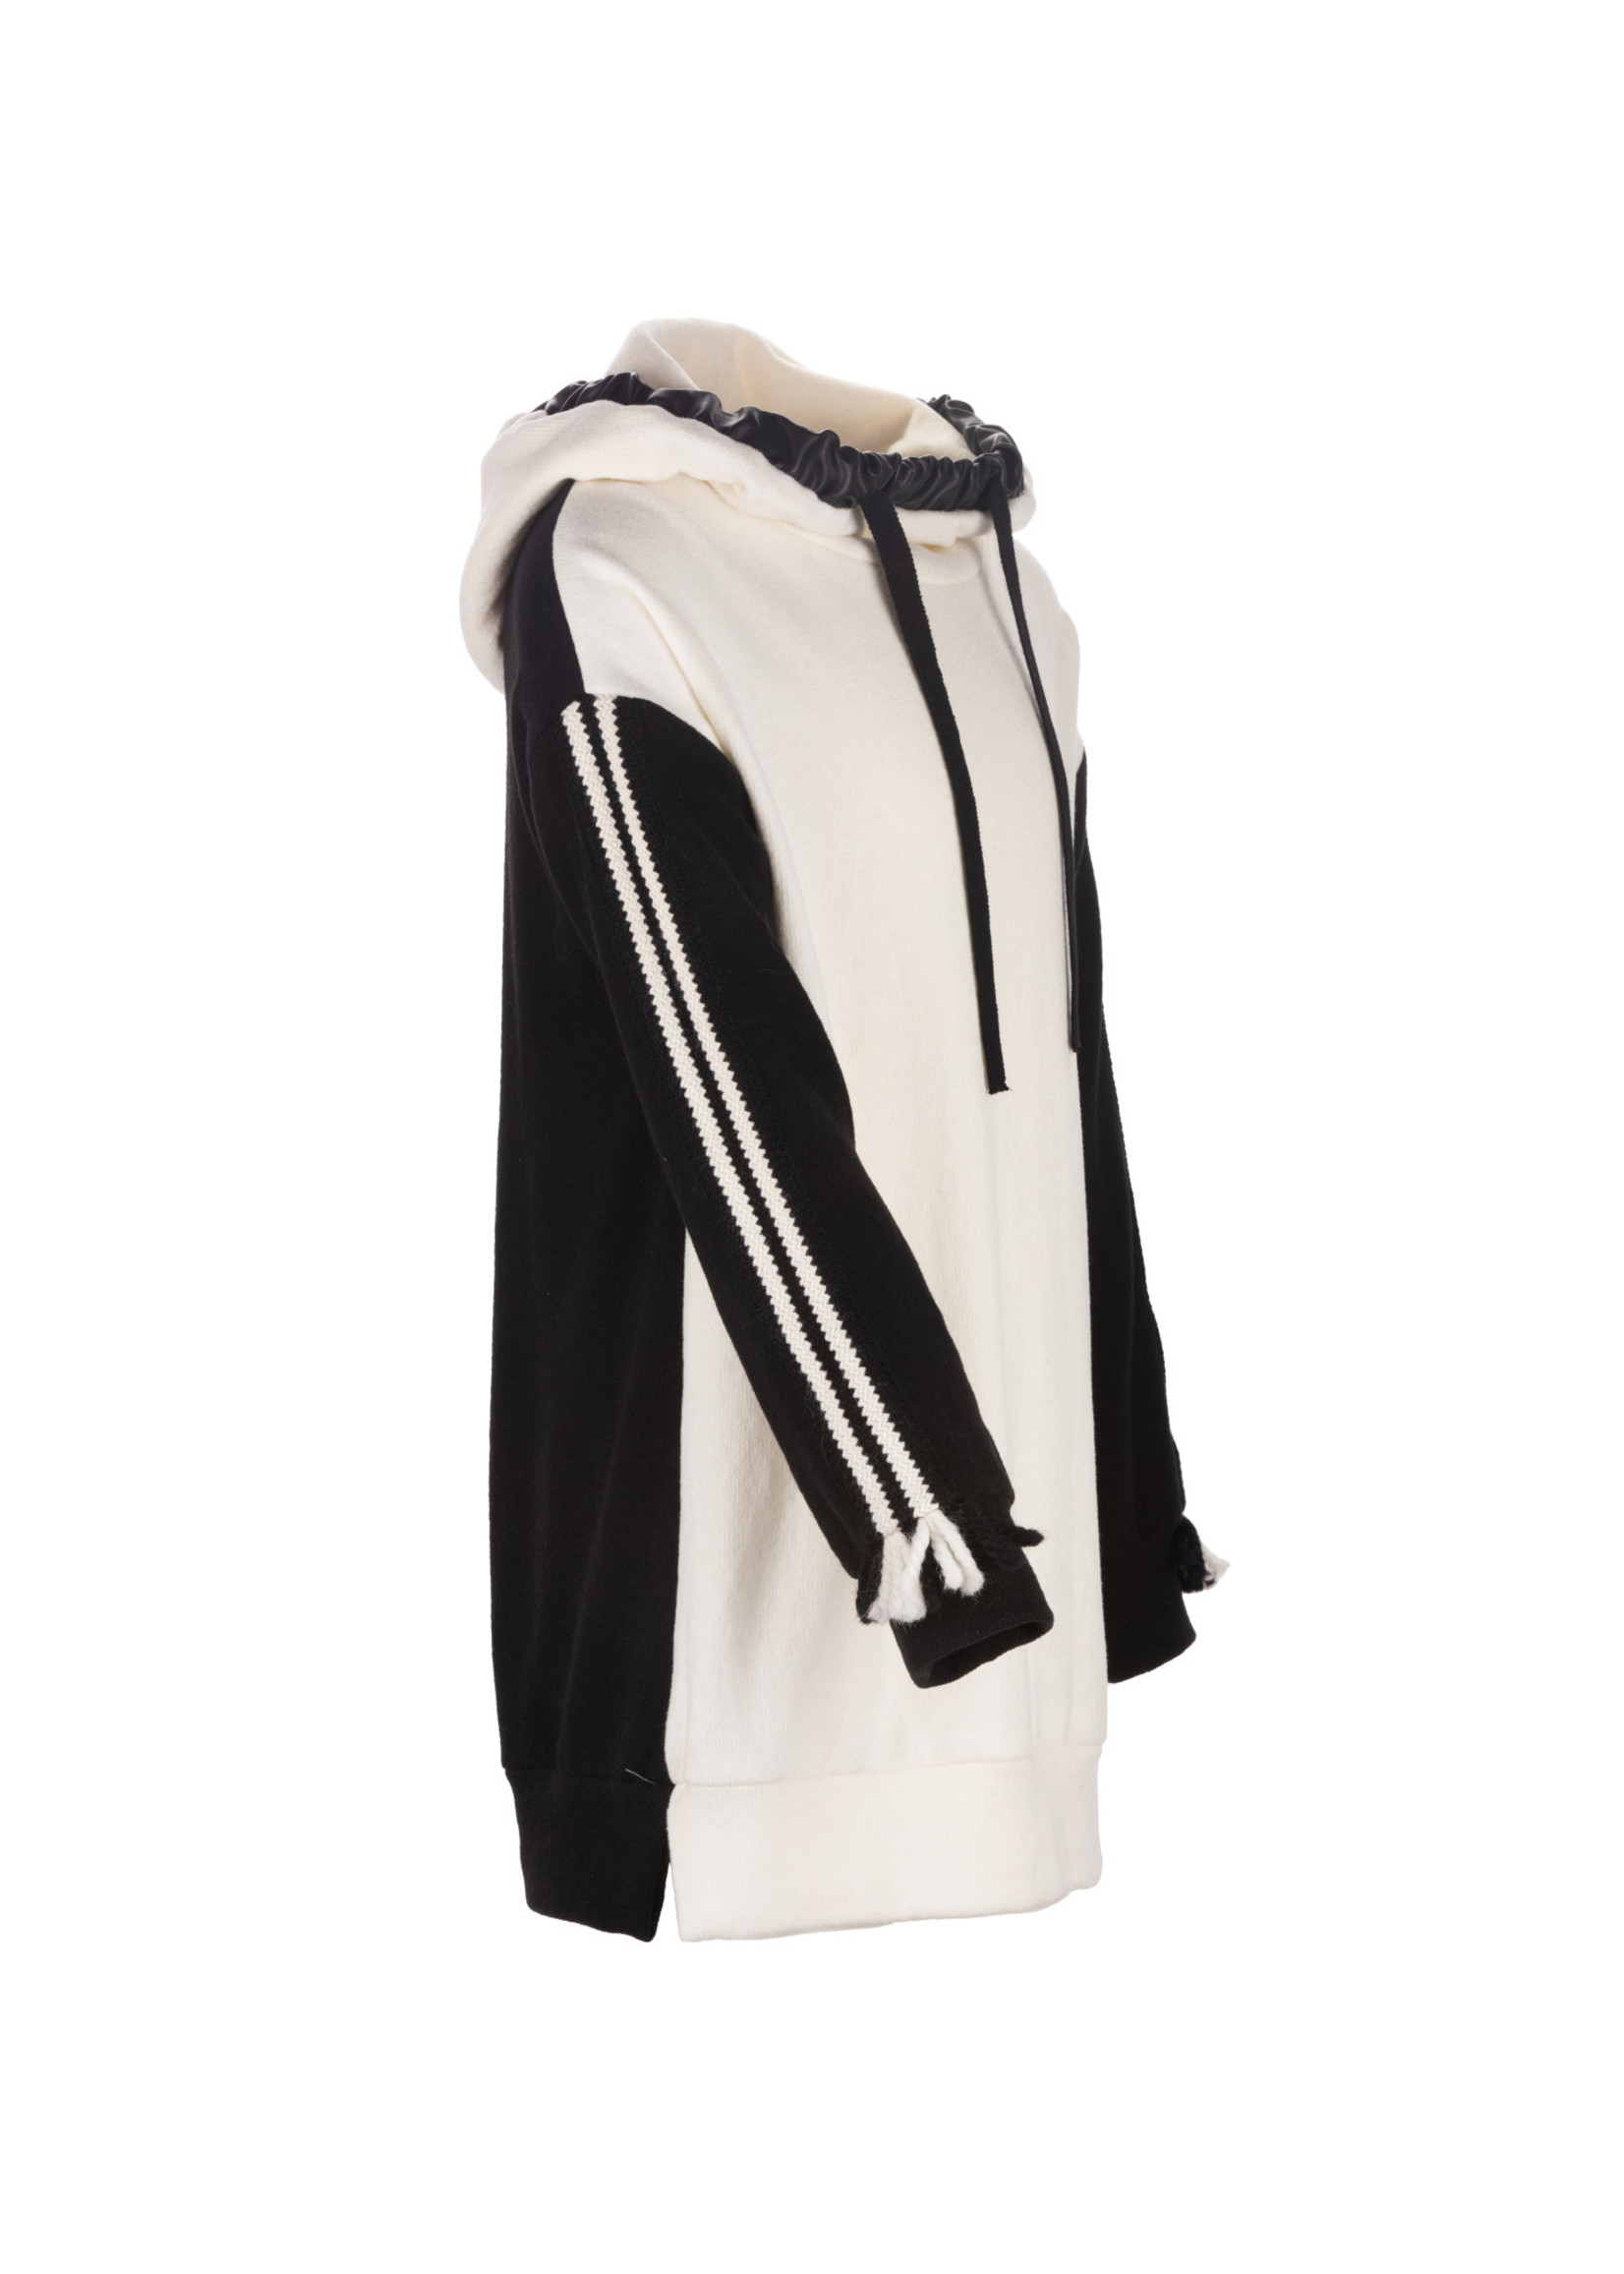 Elsy Elsy sweaterdress black/offwhite - 4907 rachele